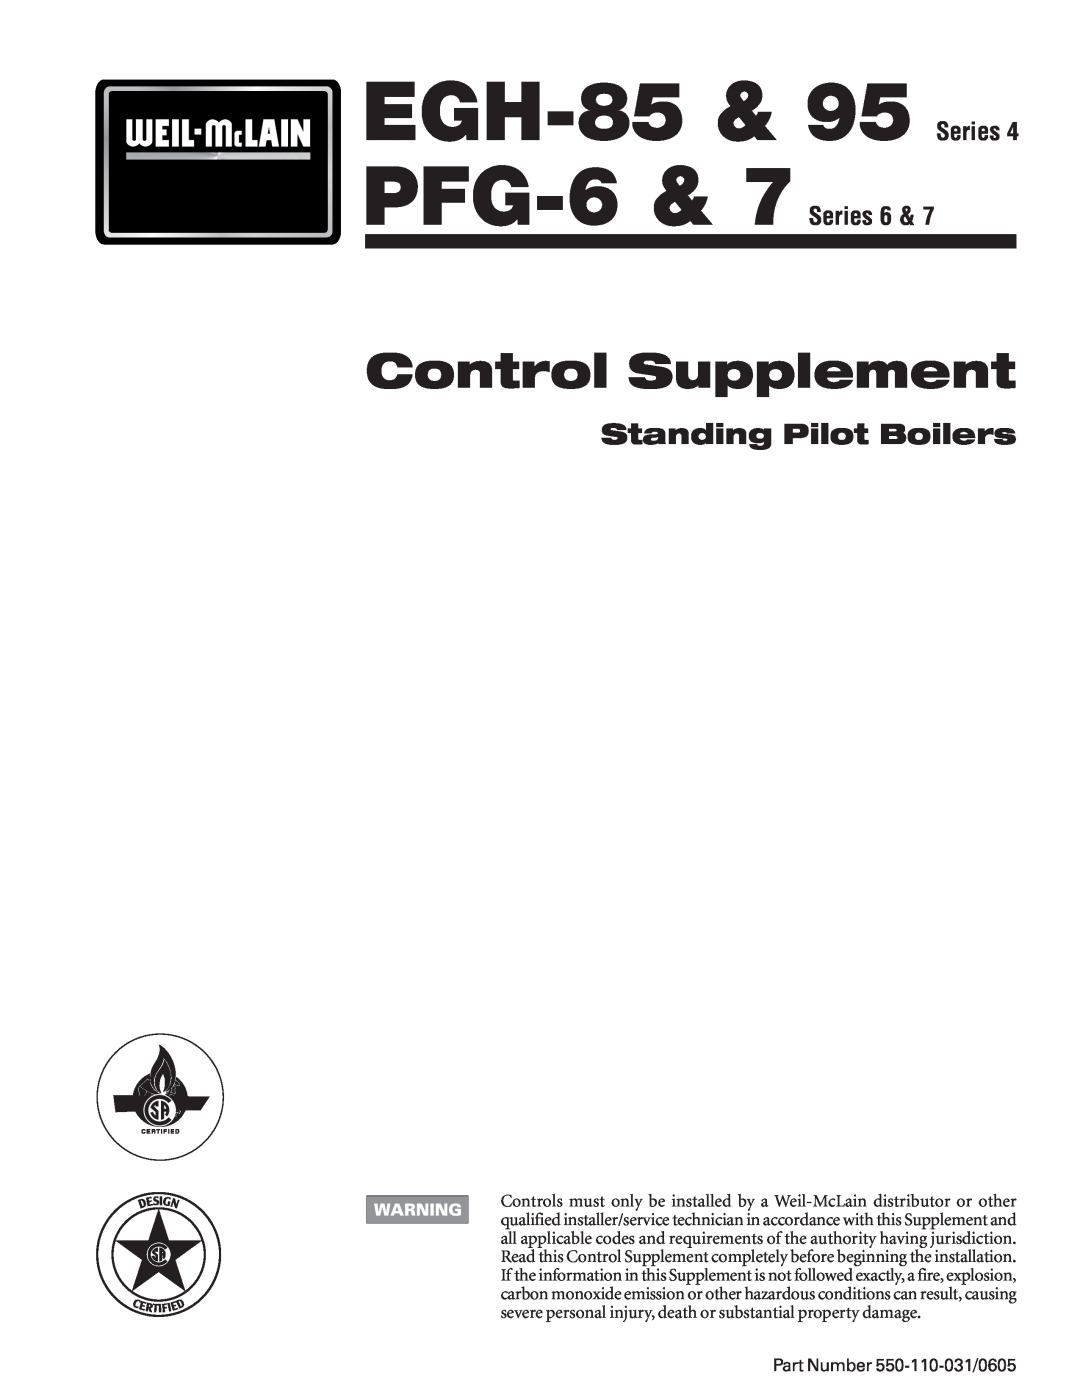 Weil-McLain EGH-95 manual EGH-85& 95 Series, Control Supplement, Standing Pilot Boilers, PFG-6& 7 Series 